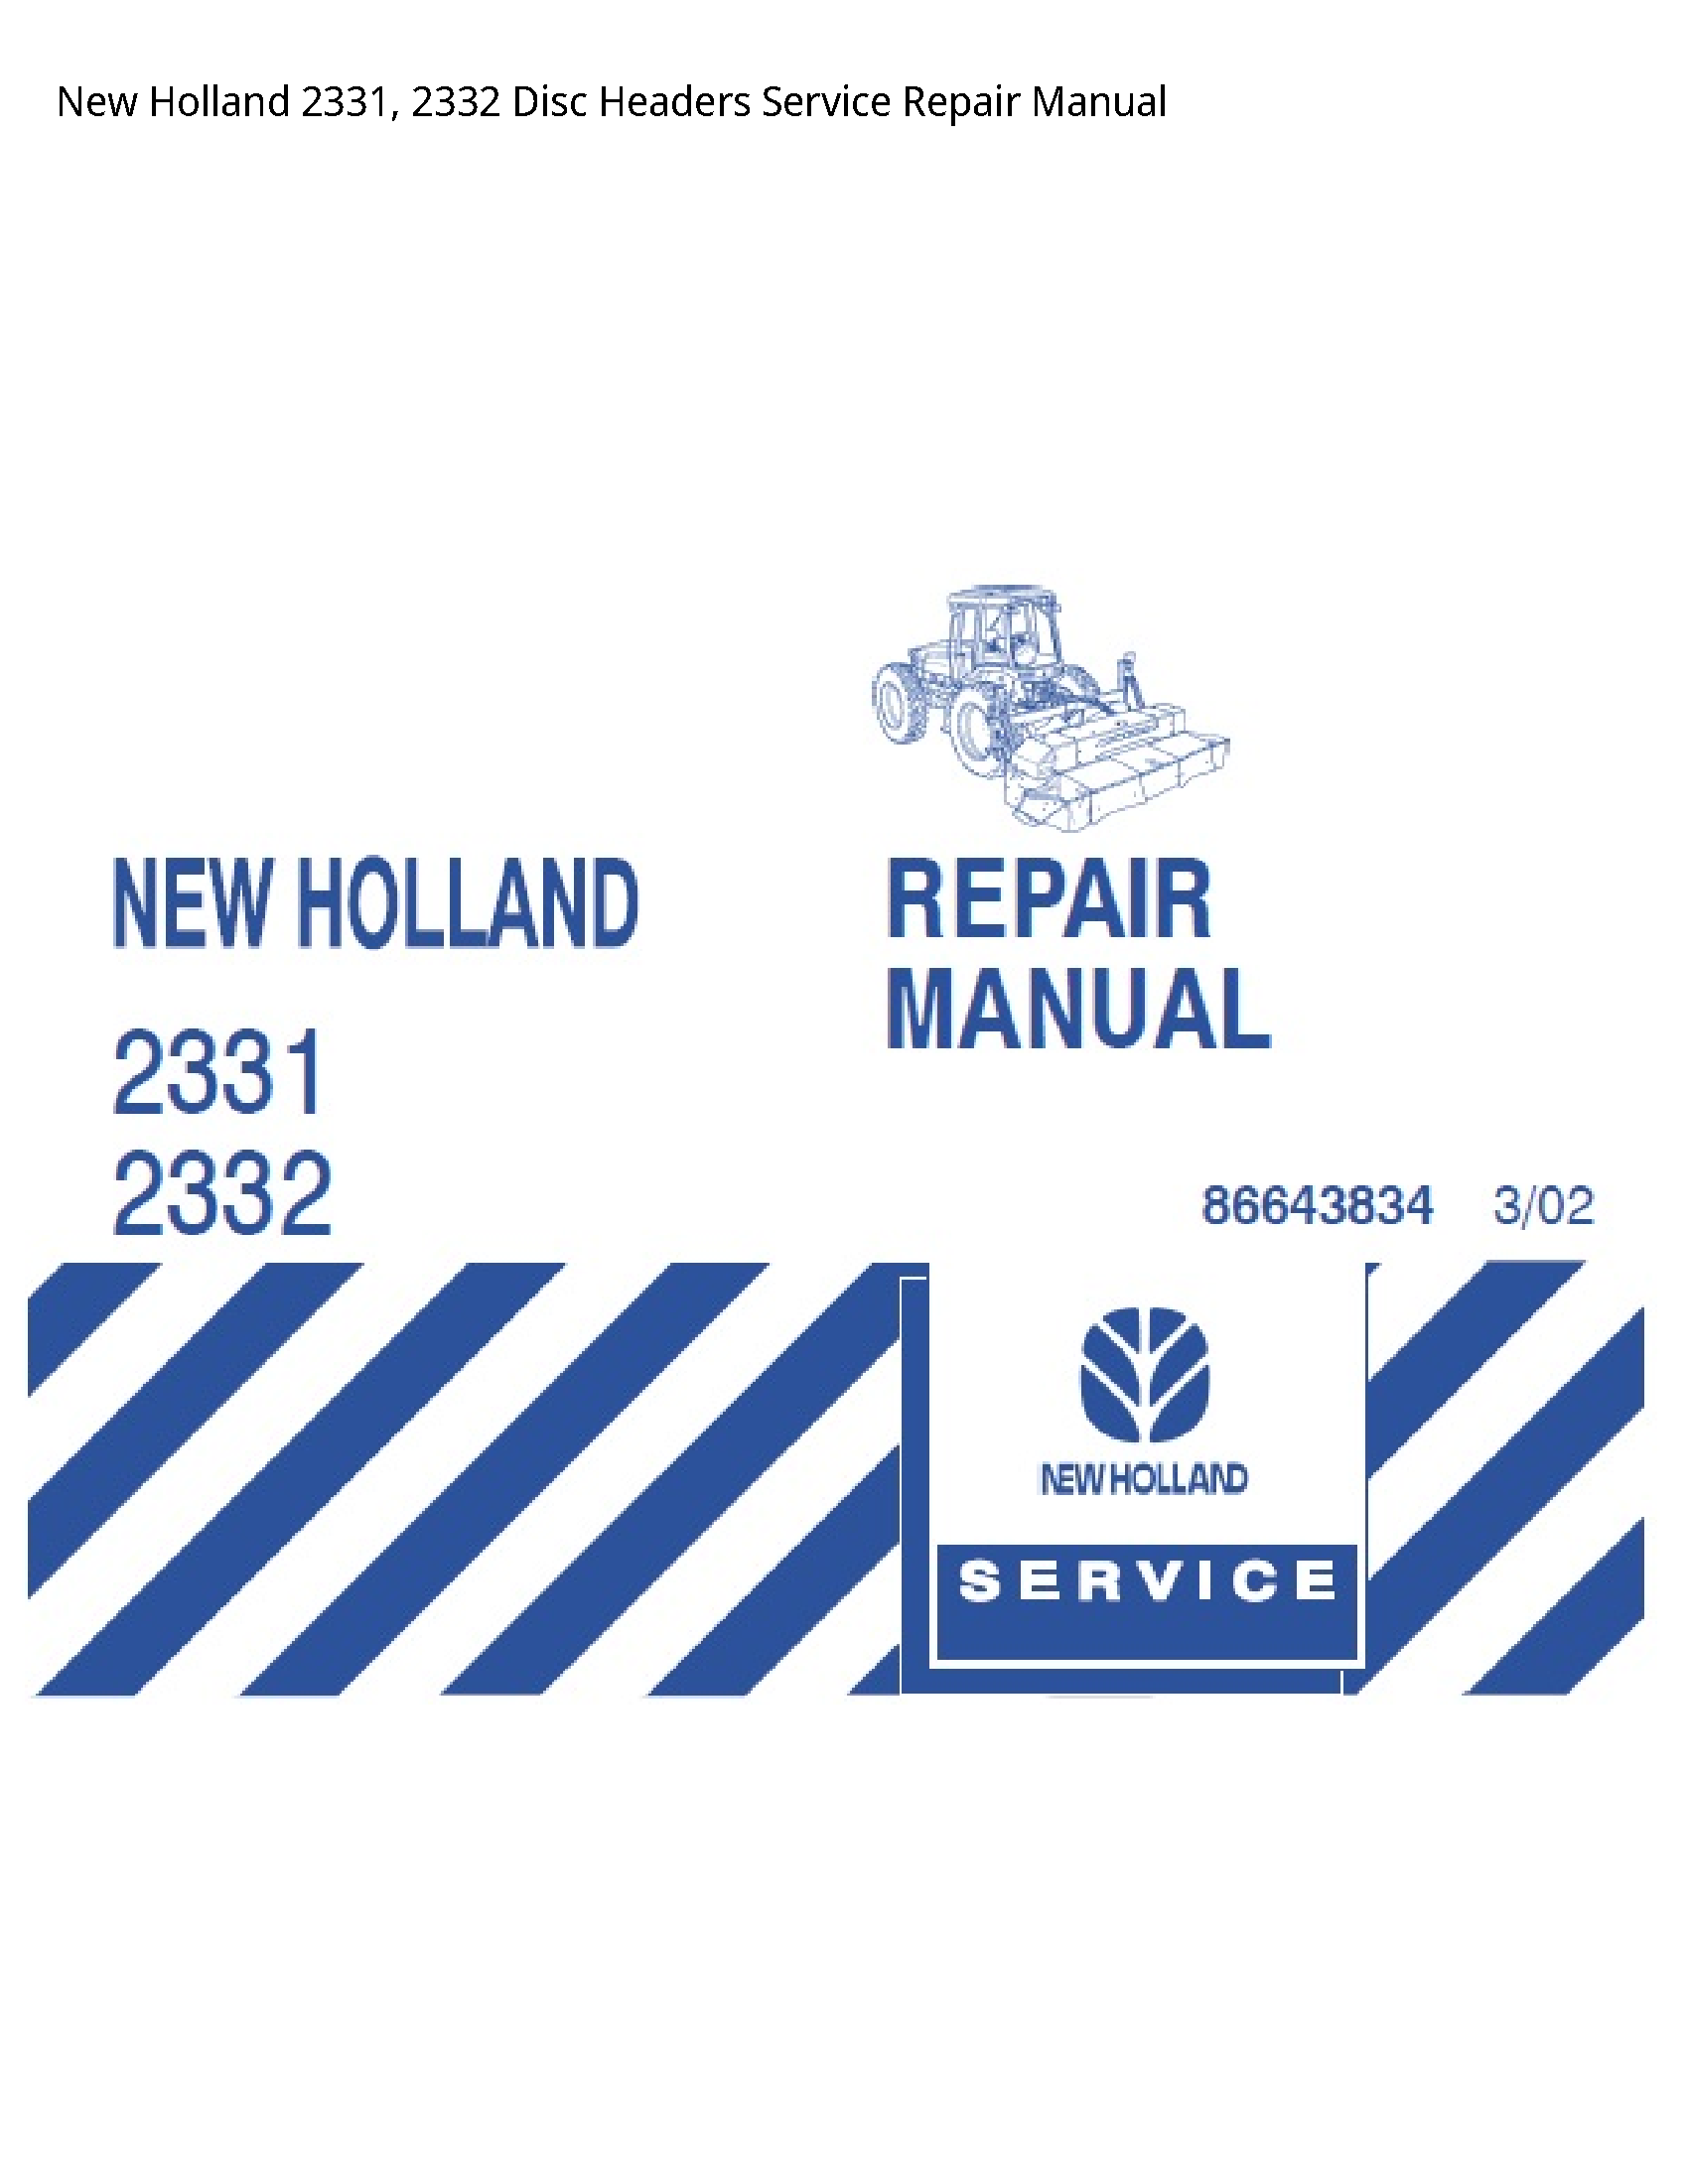 New Holland 2331 Disc Headers manual